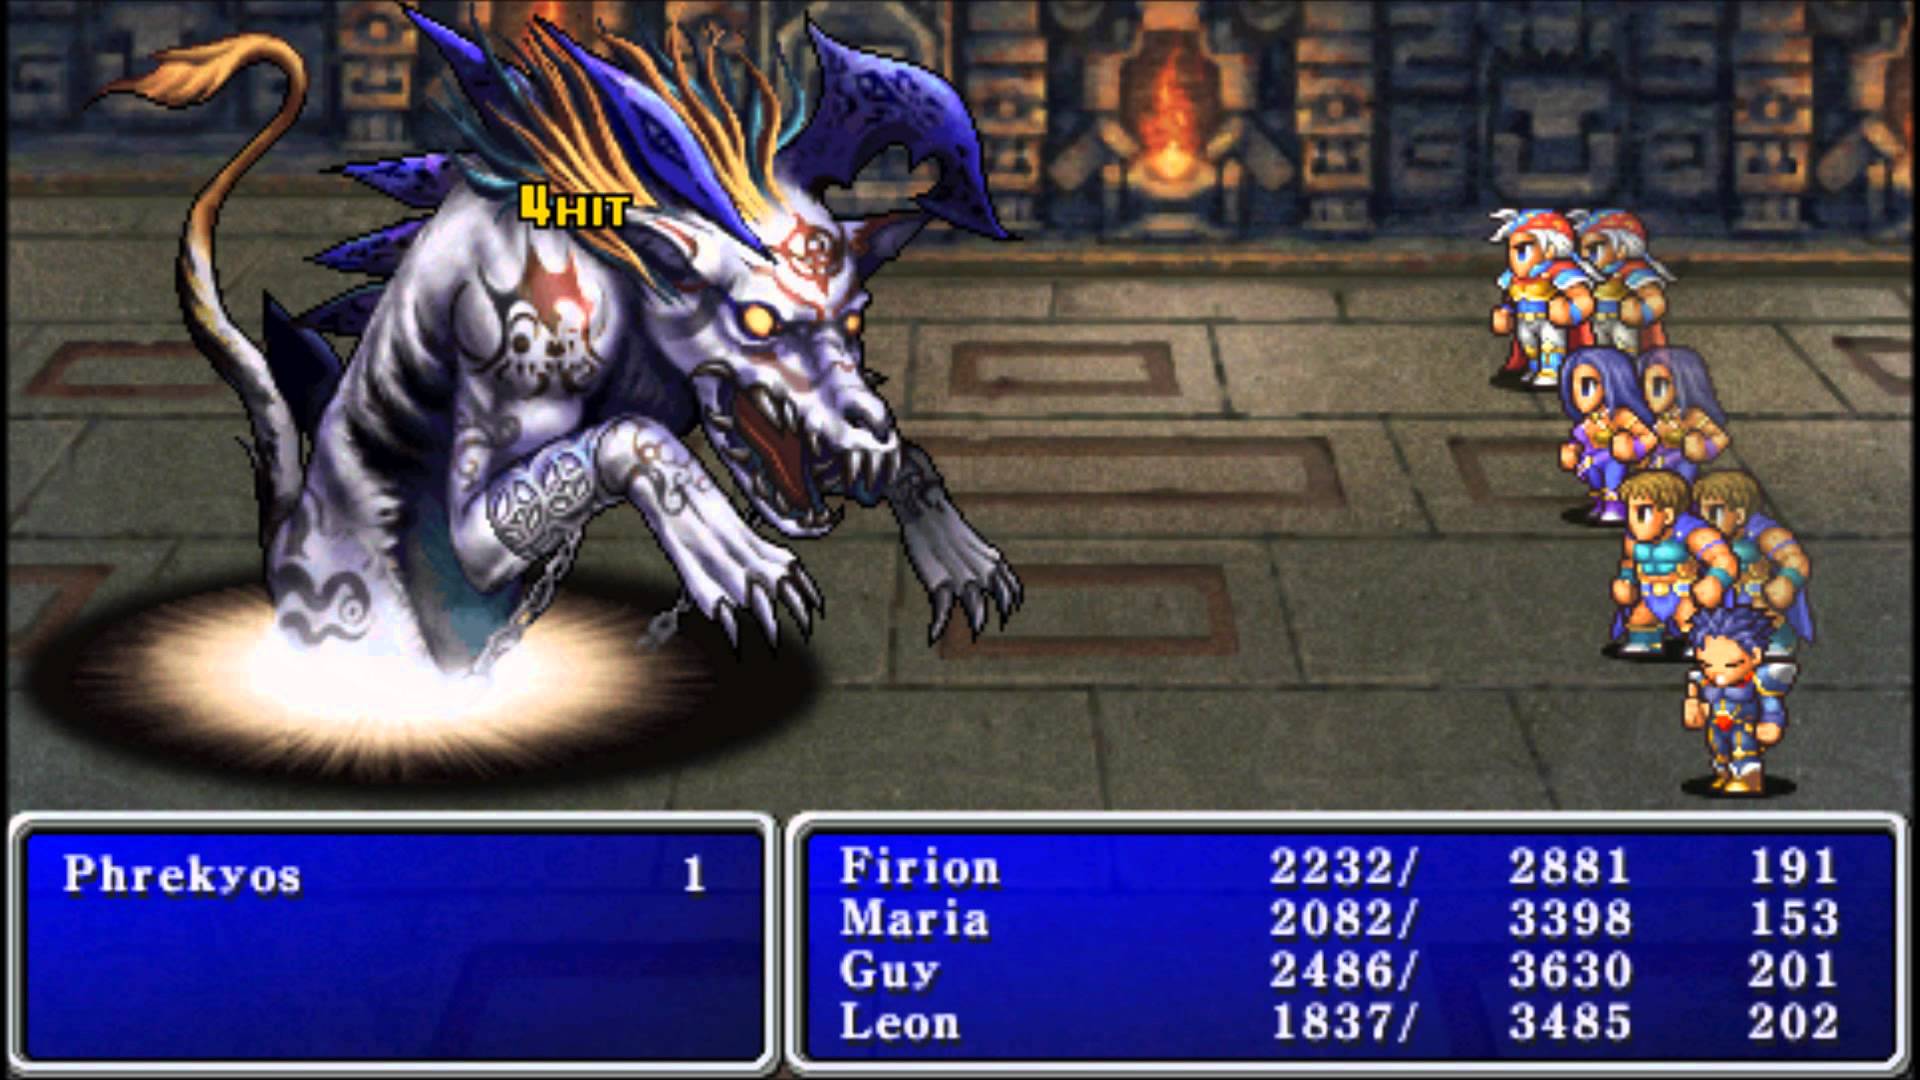 Best SNES Games - Final Fantasy II